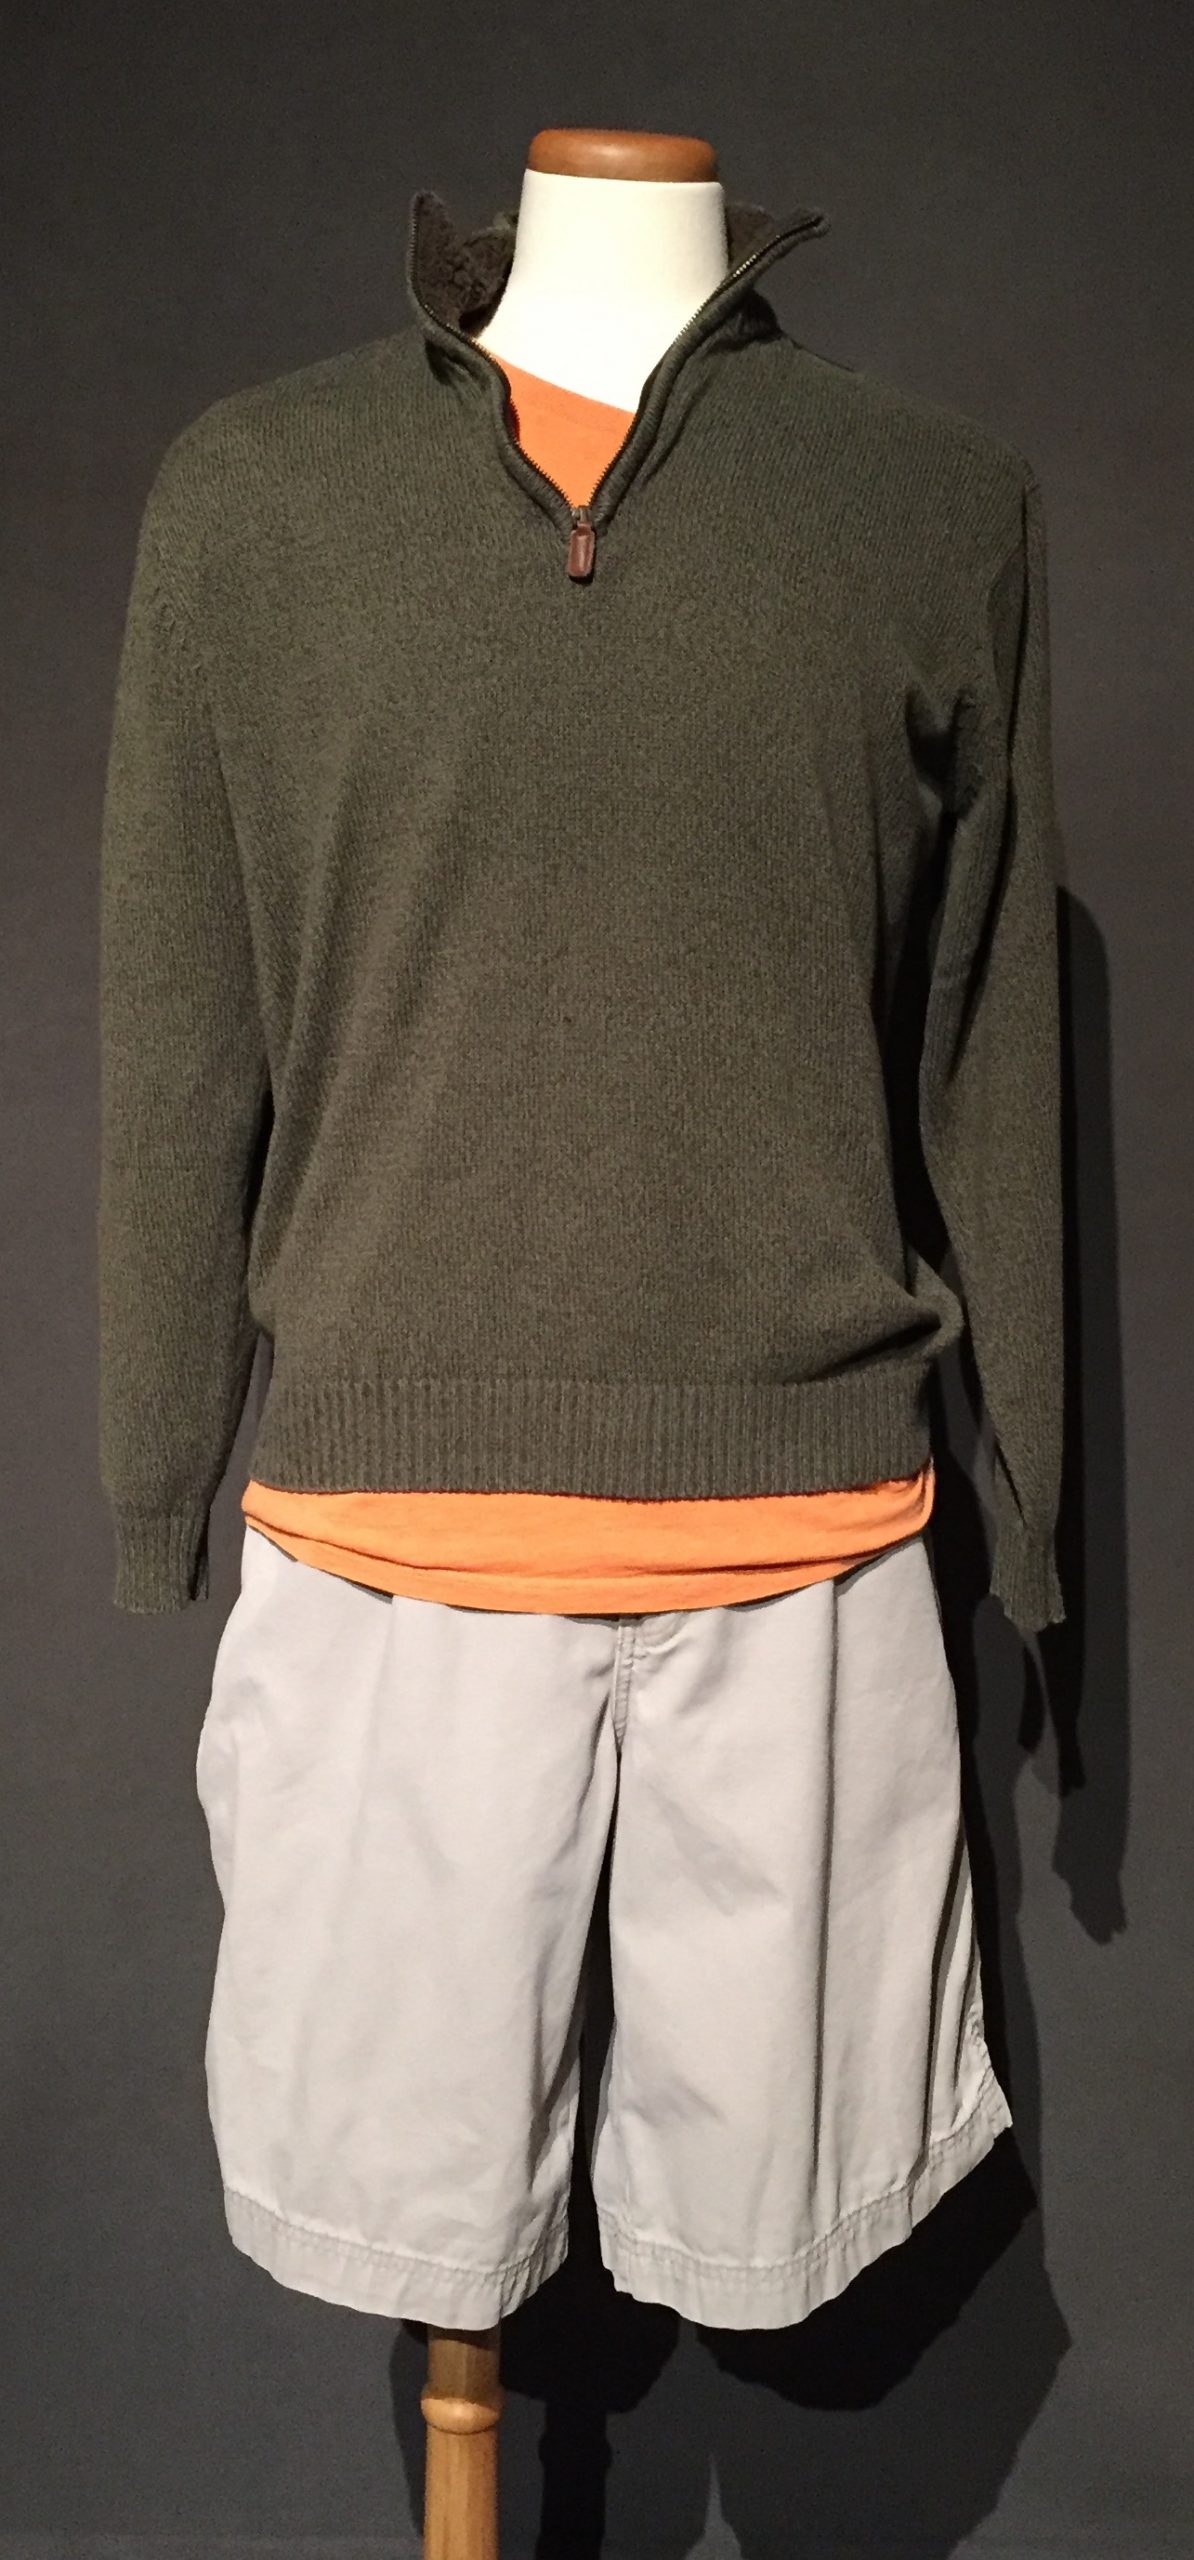 Green pullover turtleneck sweater, orange t-shirt, tan cargo shorts